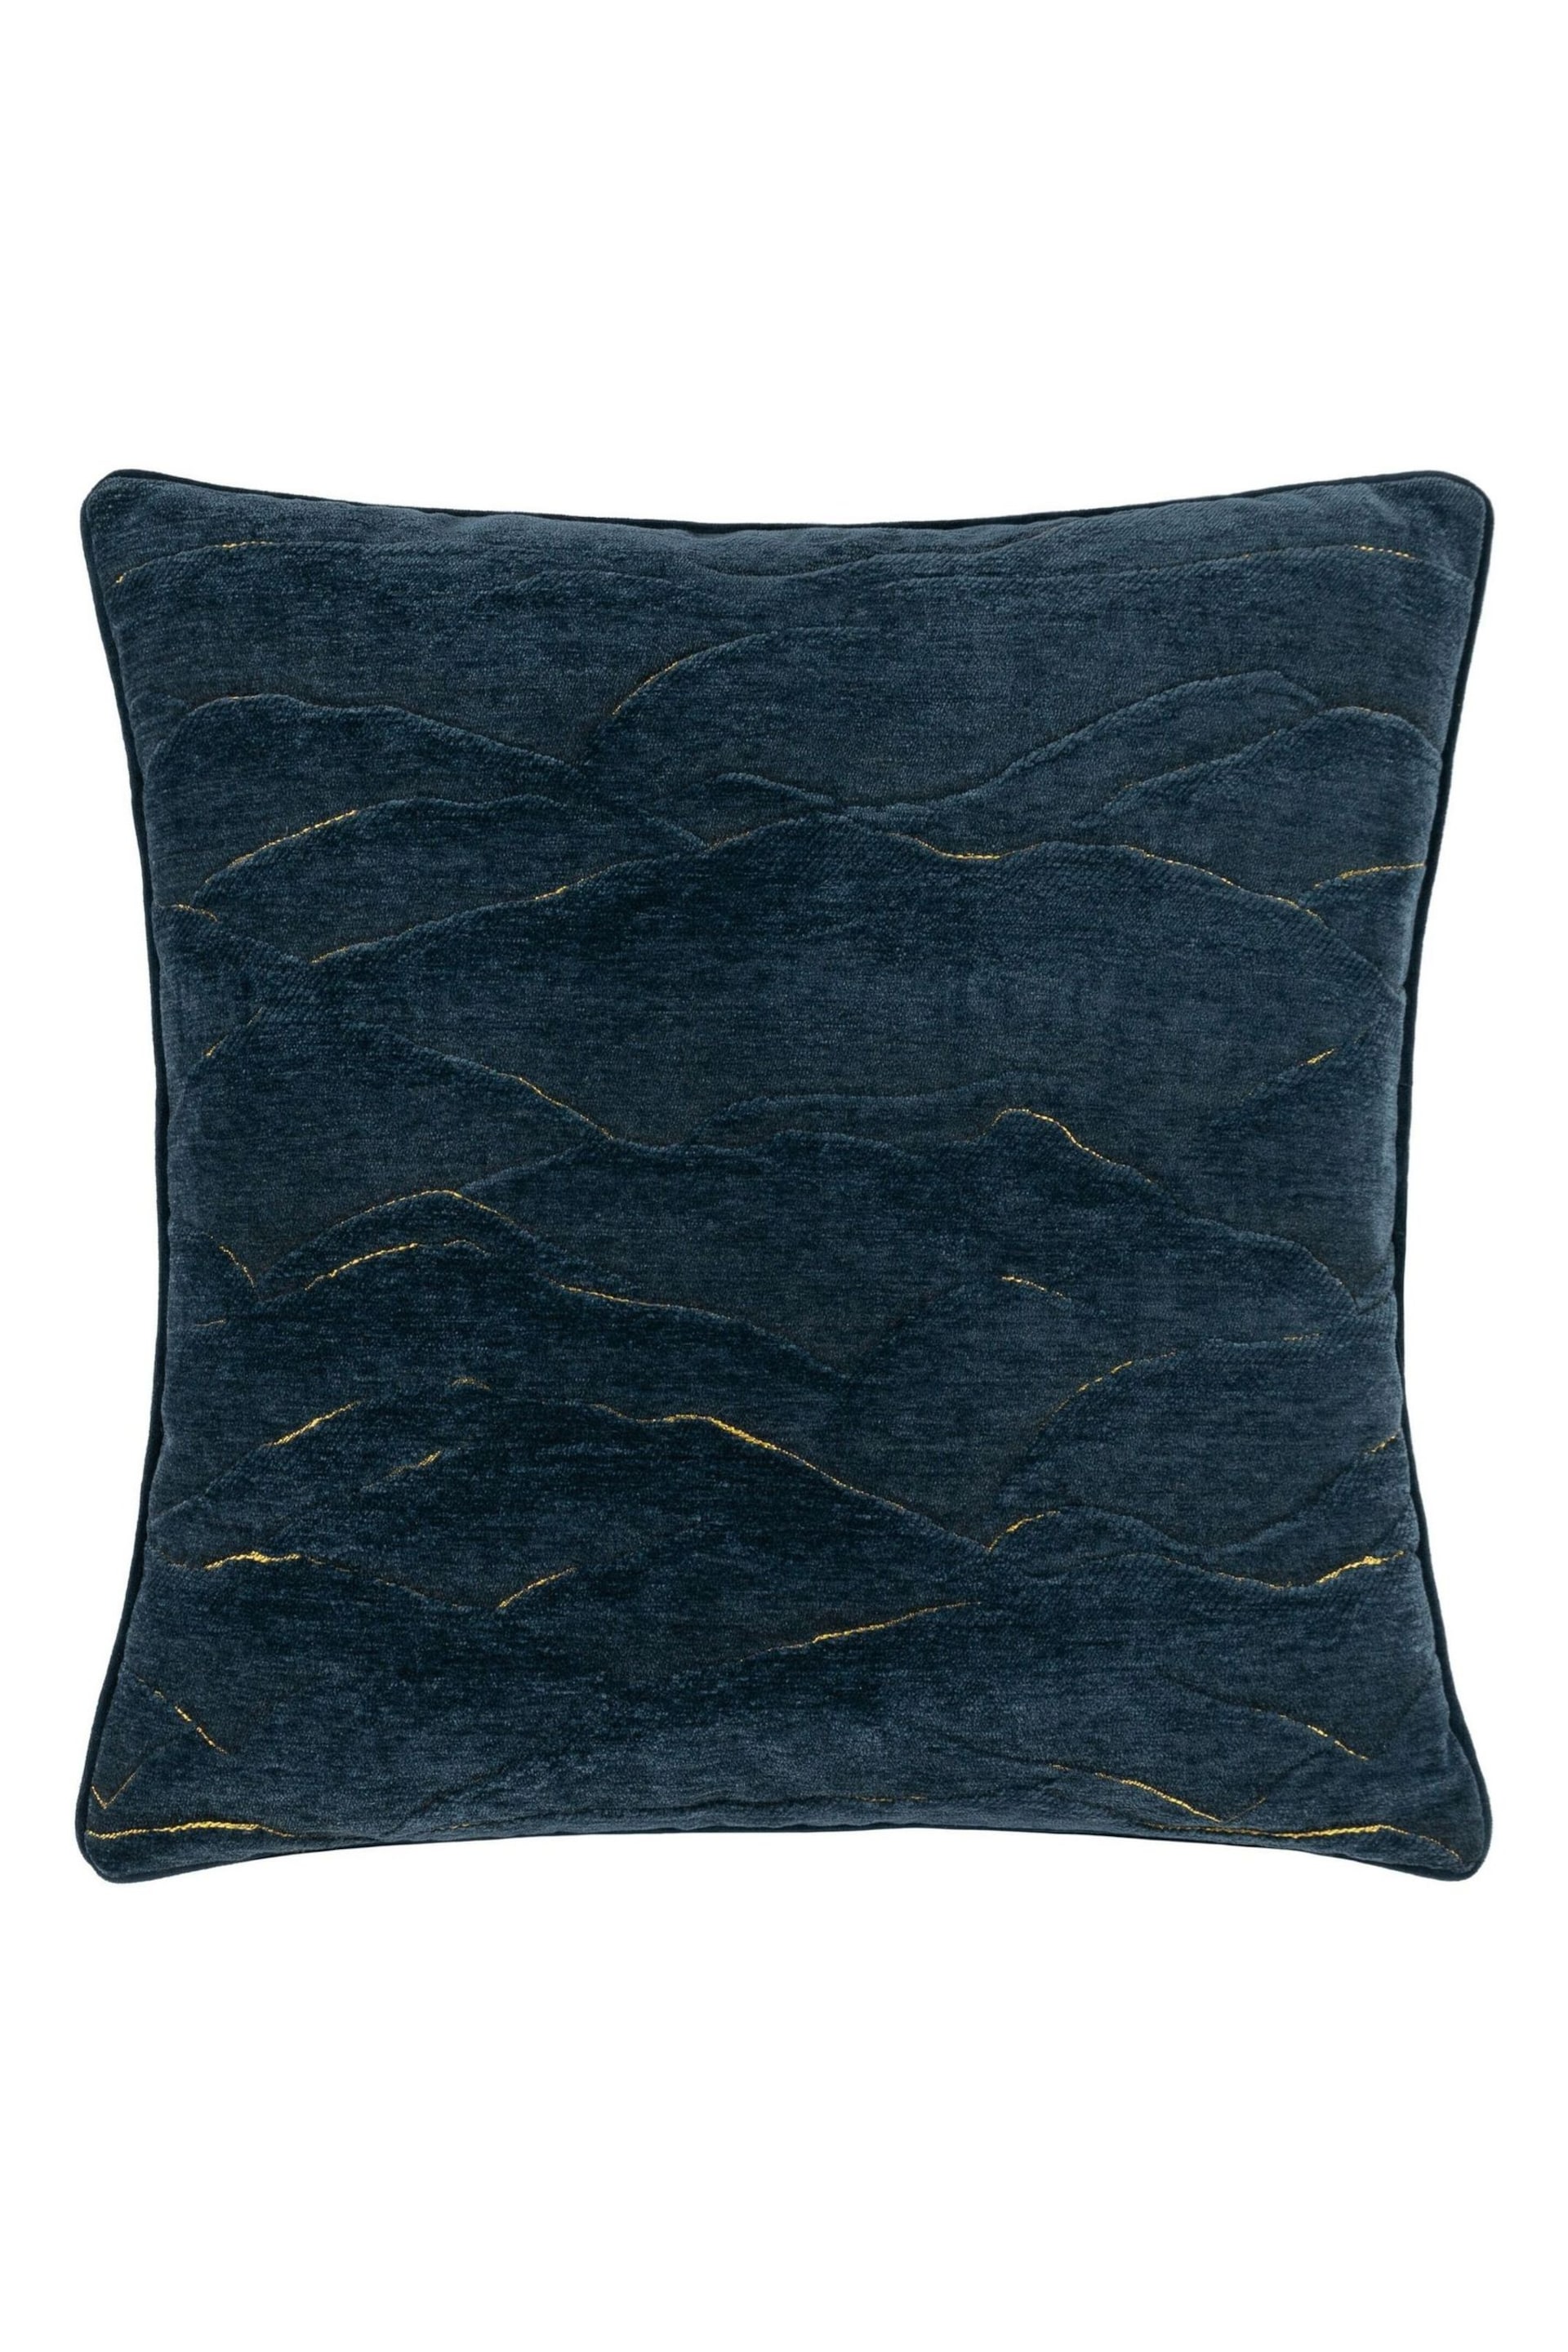 Paoletti Blue Stratus Jacquard Feather Filled Cushion - Image 2 of 6